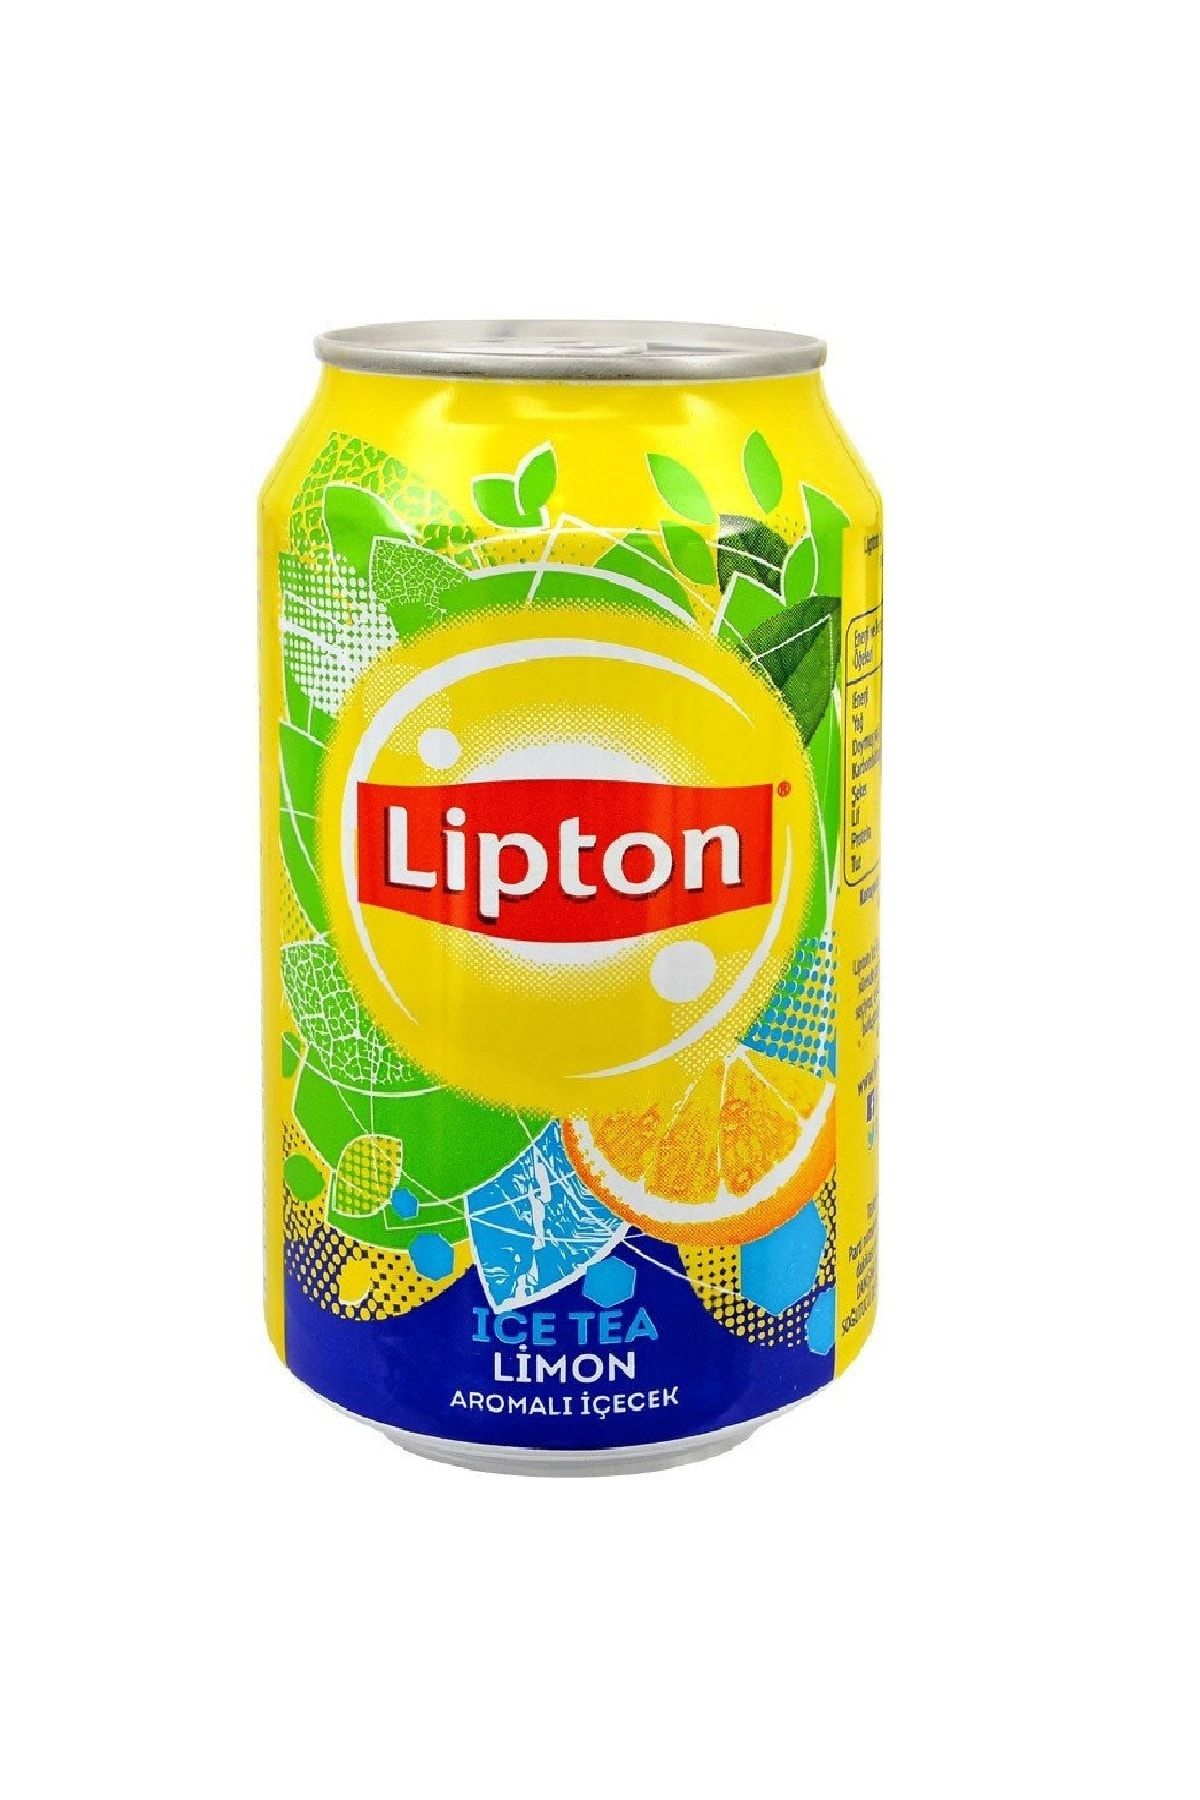 Айс чай. Липтон. Алкогольный чай Липтон. Lipton Ice Tea. Липтон 0.6.